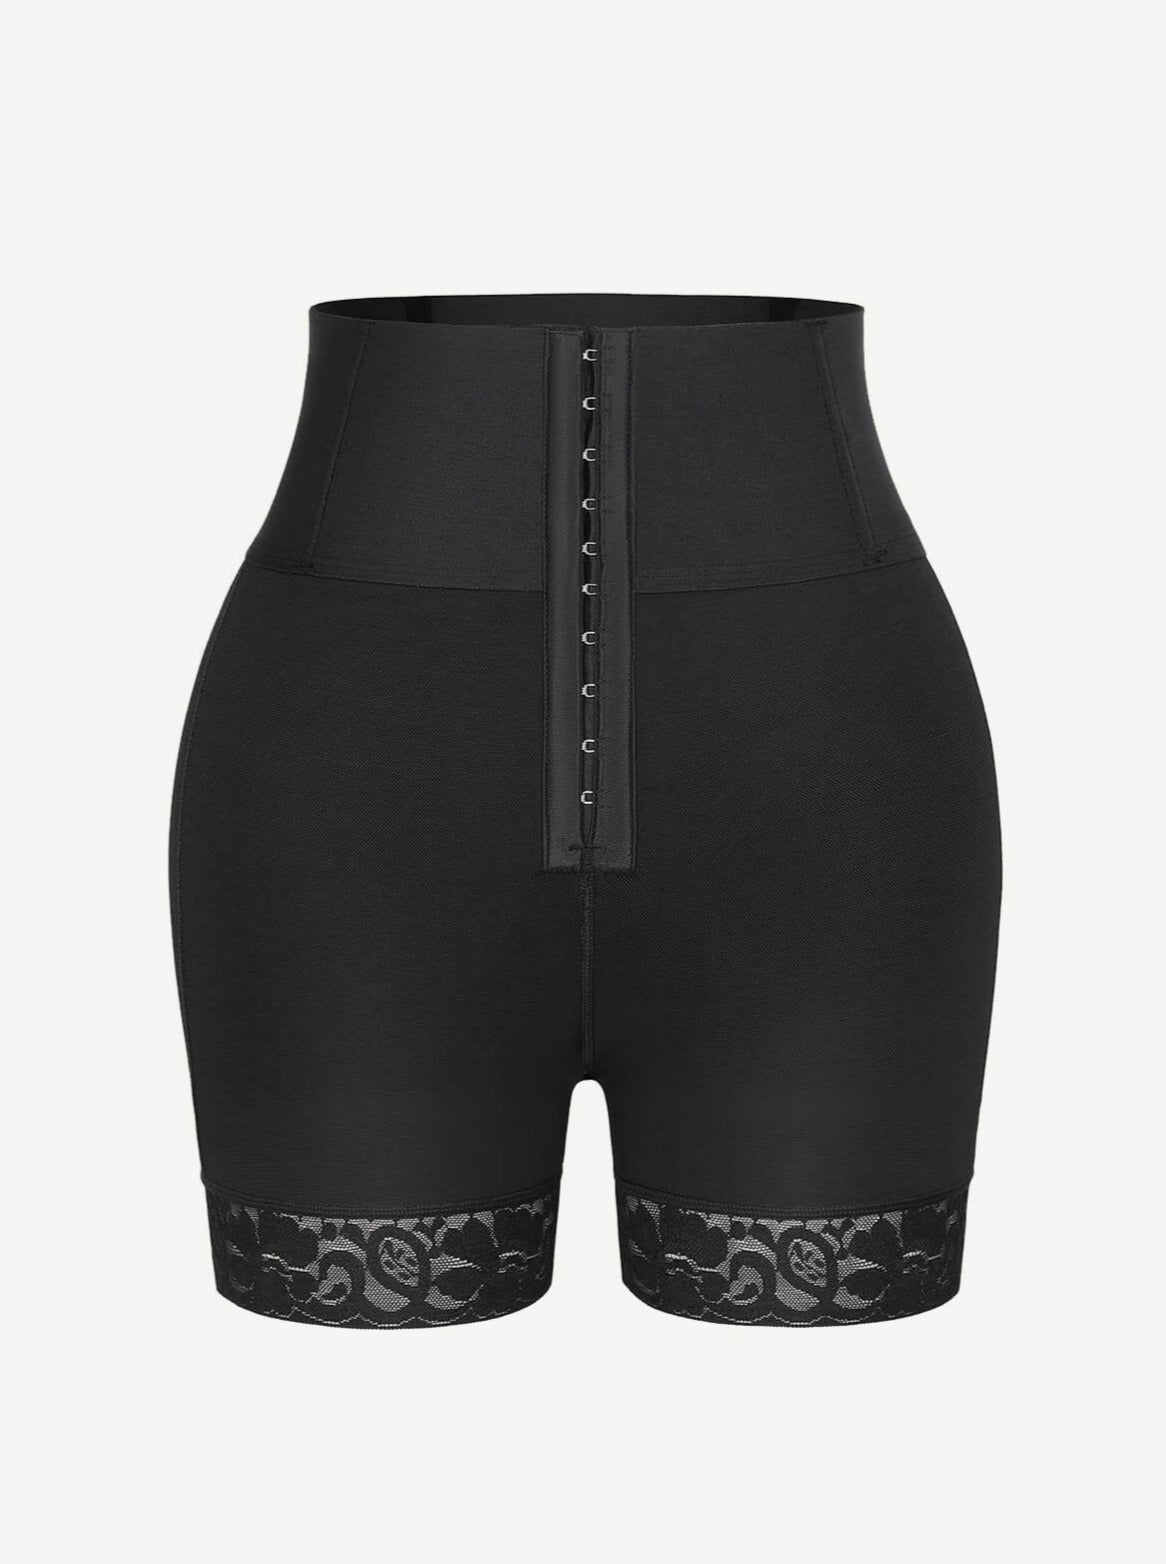 MRULIC shapewear for women tummy control Women's high waist and buttocks  tucking waist shaping pants Black + L